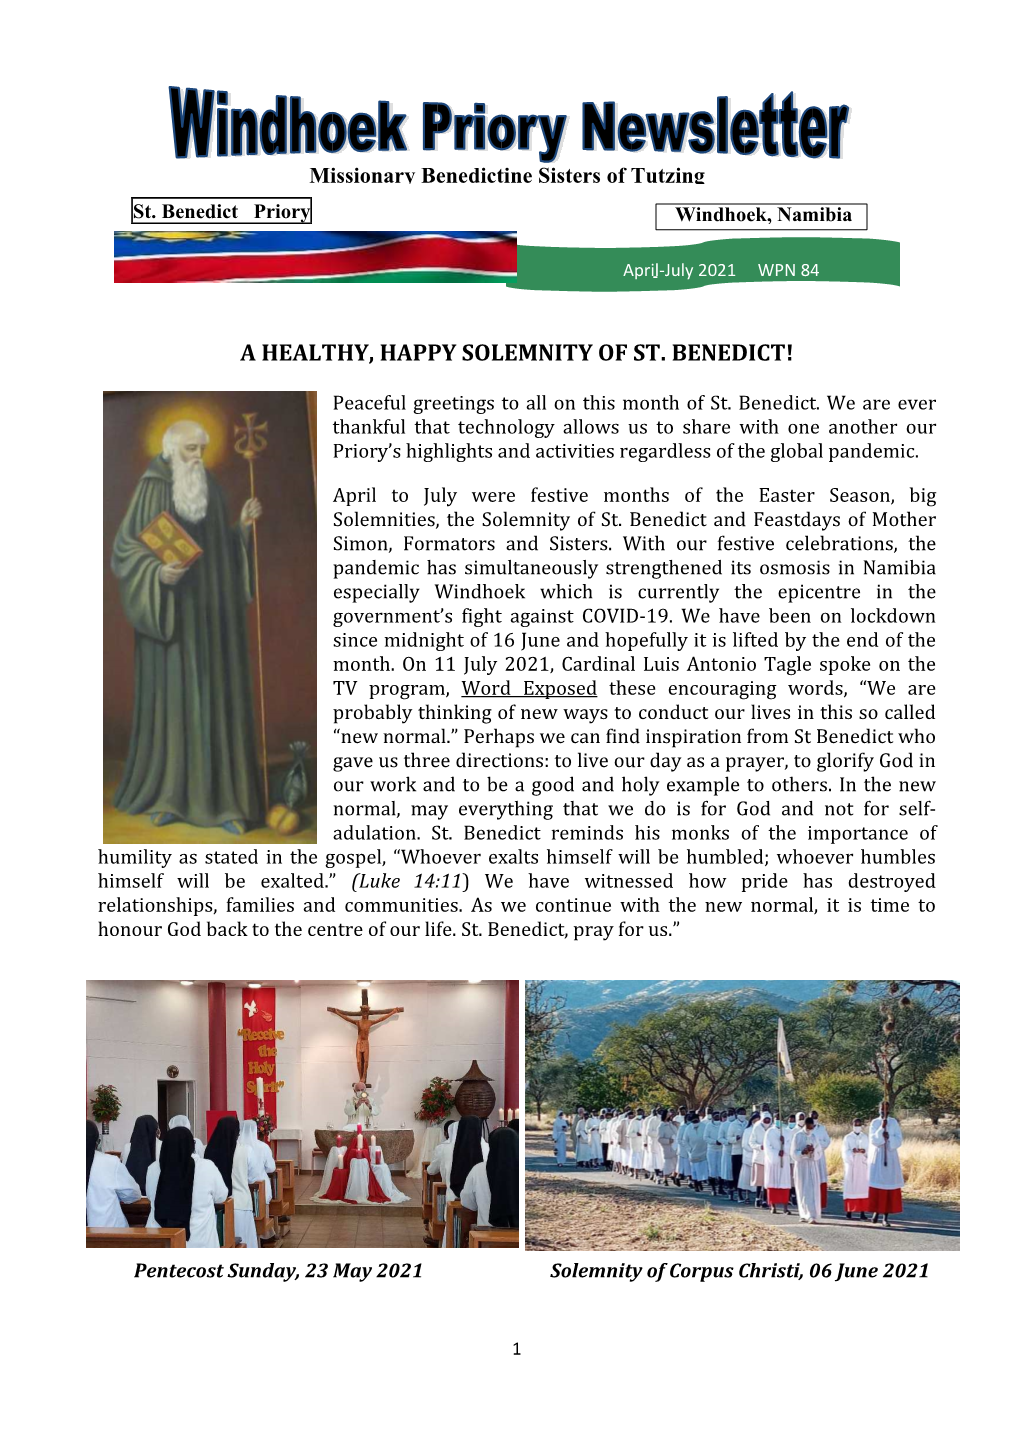 Windhoek Priory Newsletter, Revised April-July 2021